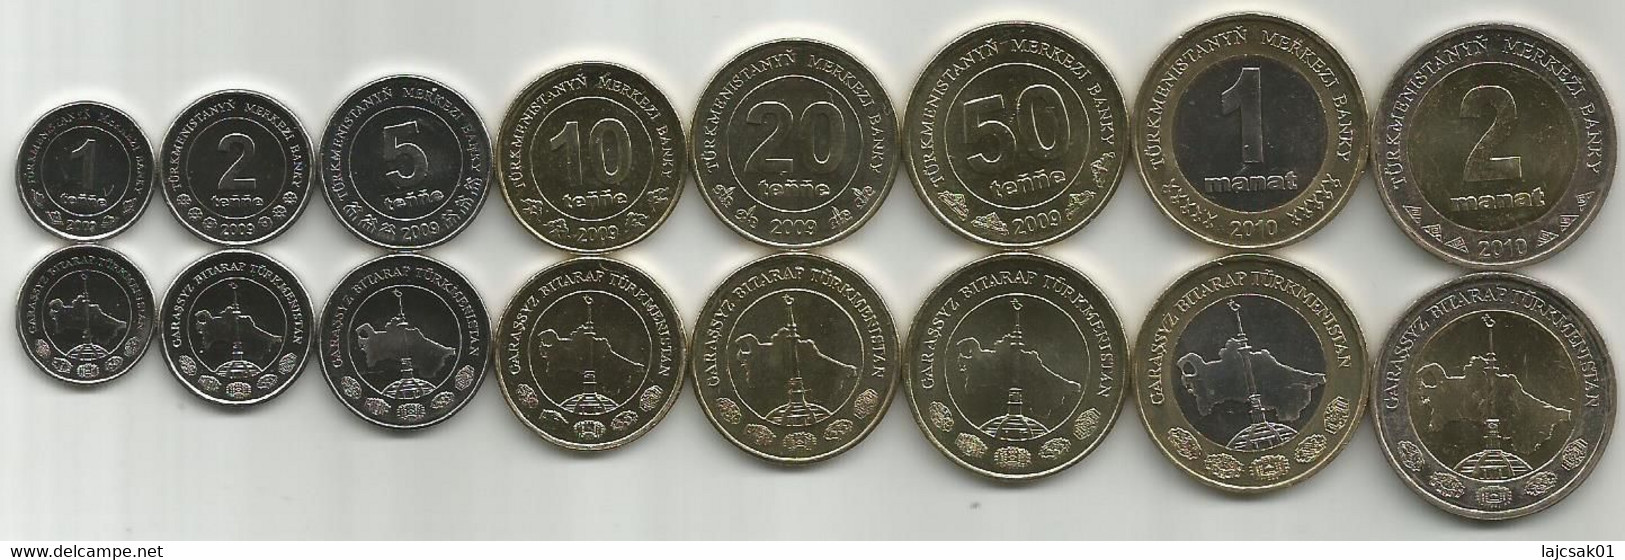 Turkmenistan 2009/10. Complete Coin Set Of 8 Coins,high Grade - Turkmenistan